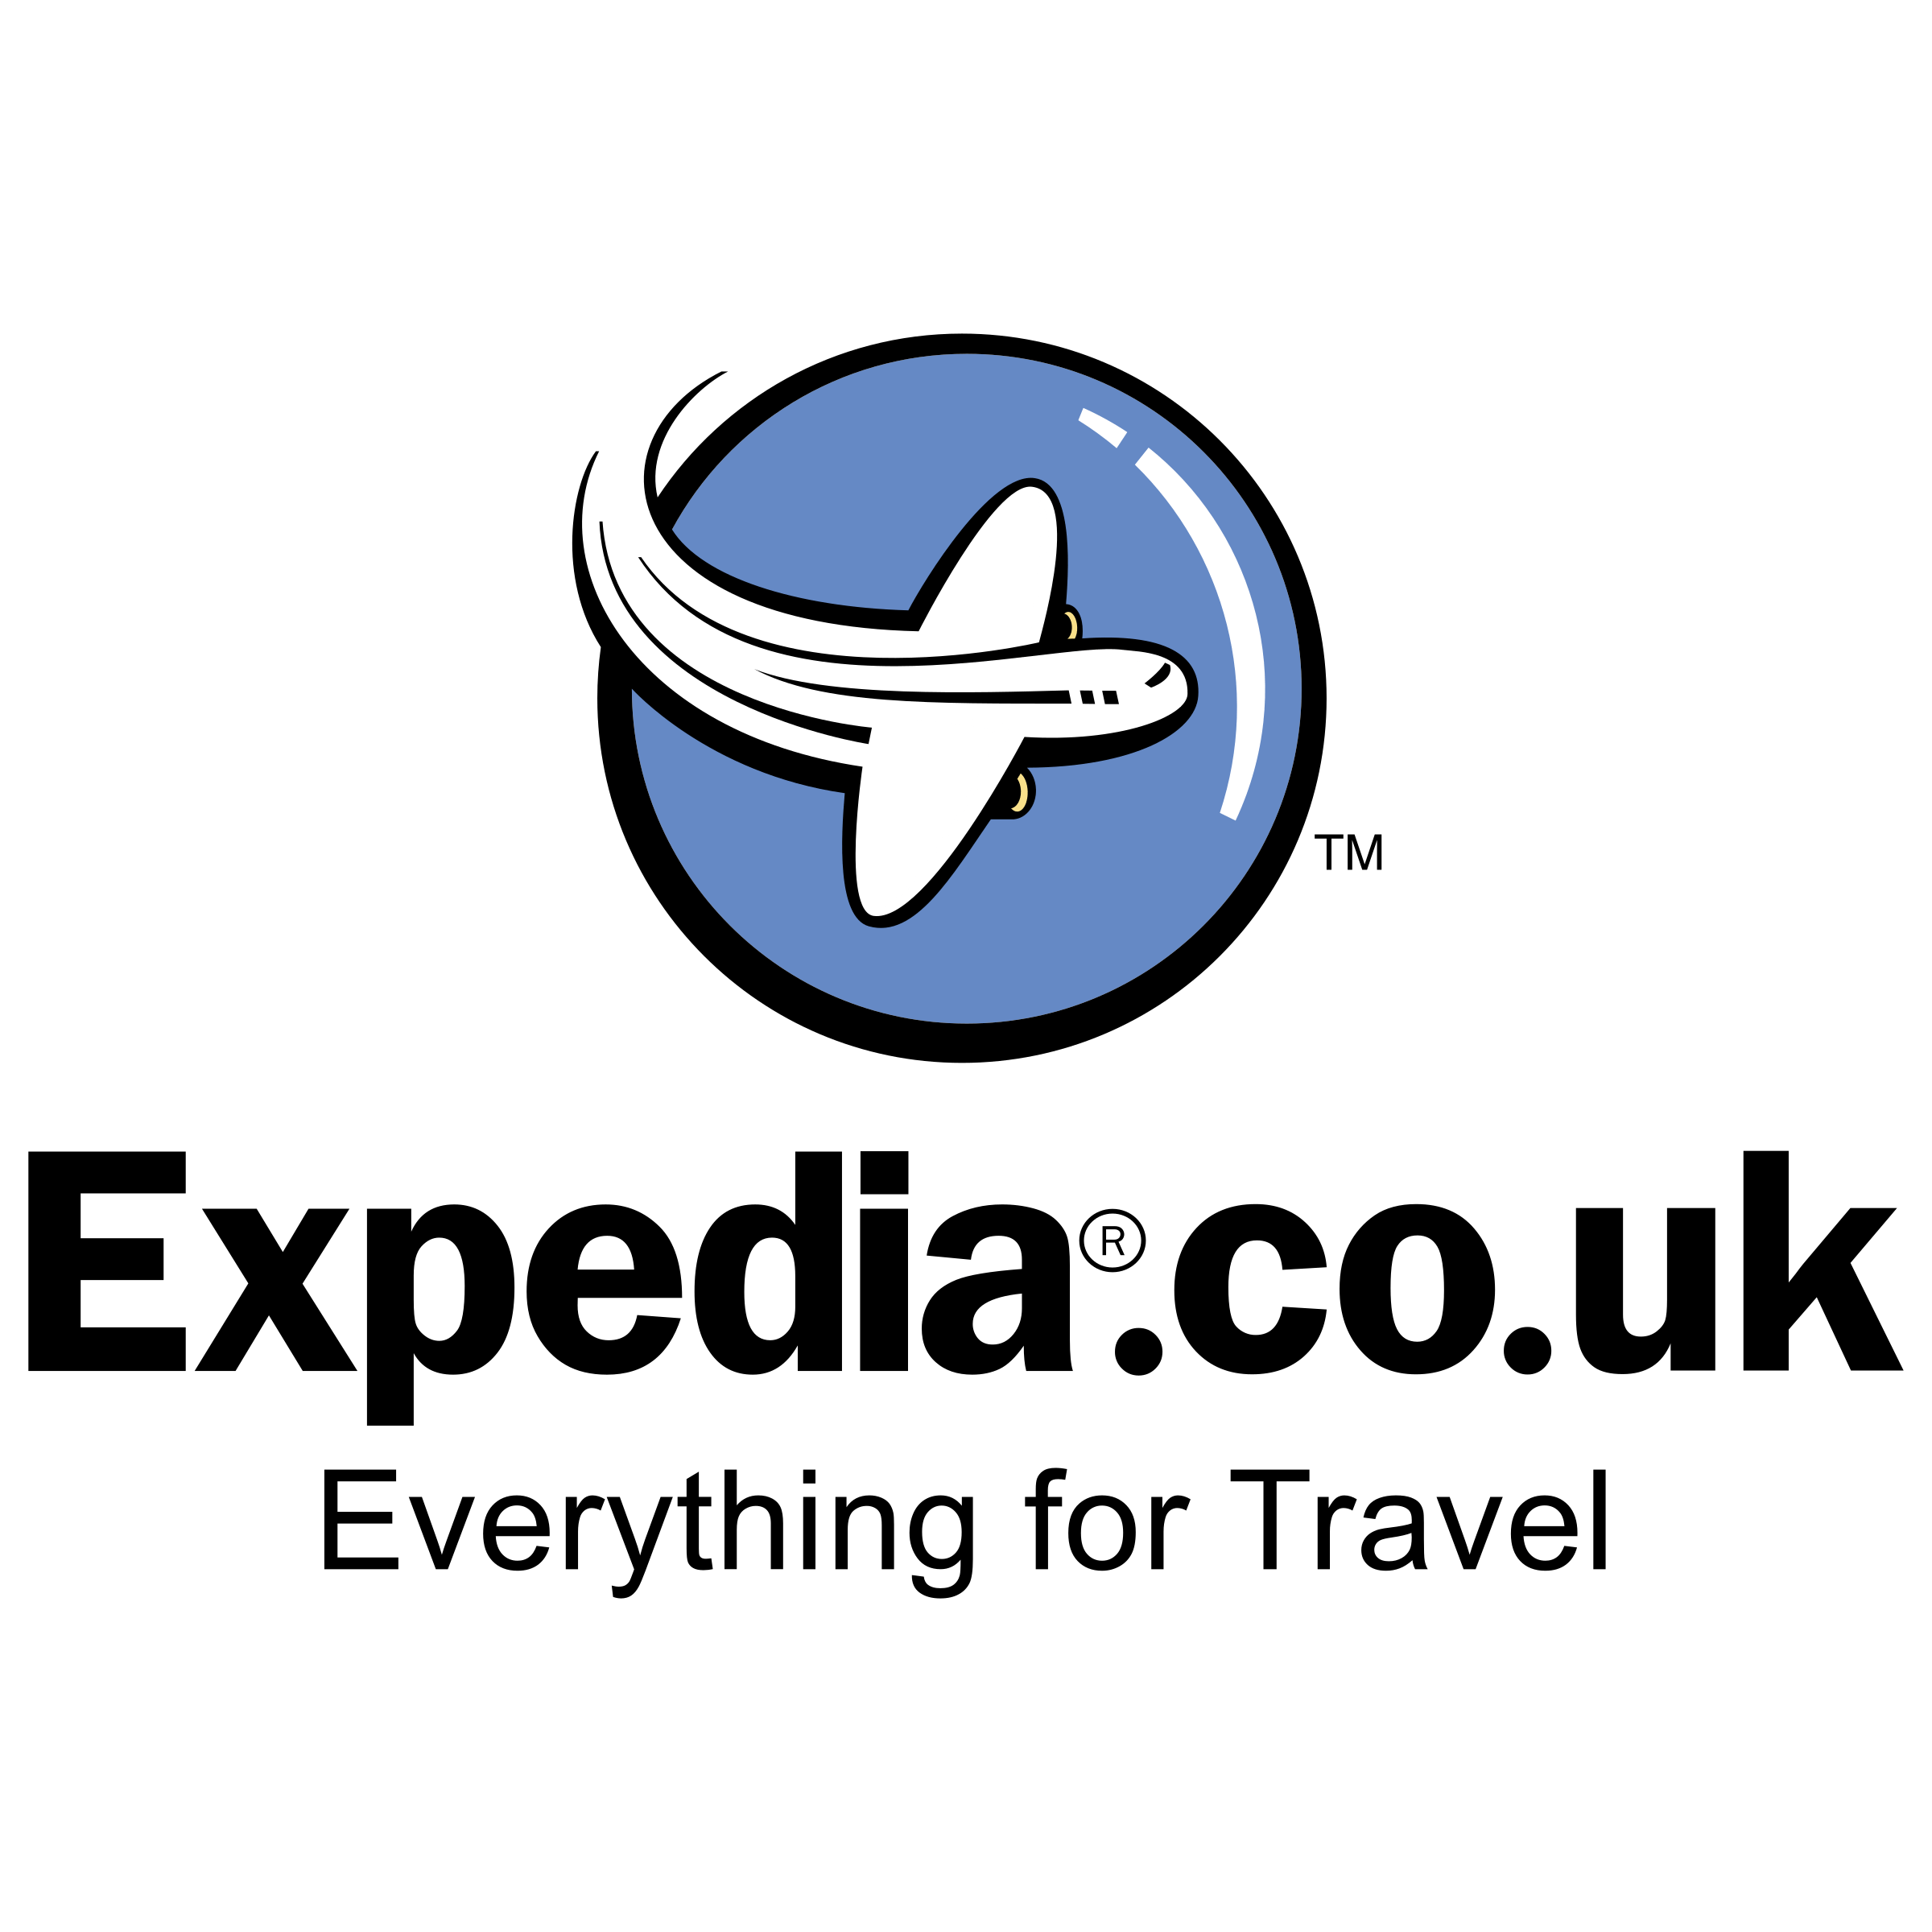 Expedia.co.nz Logo - Expedia co uk Logo PNG Transparent & SVG Vector - Freebie Supply